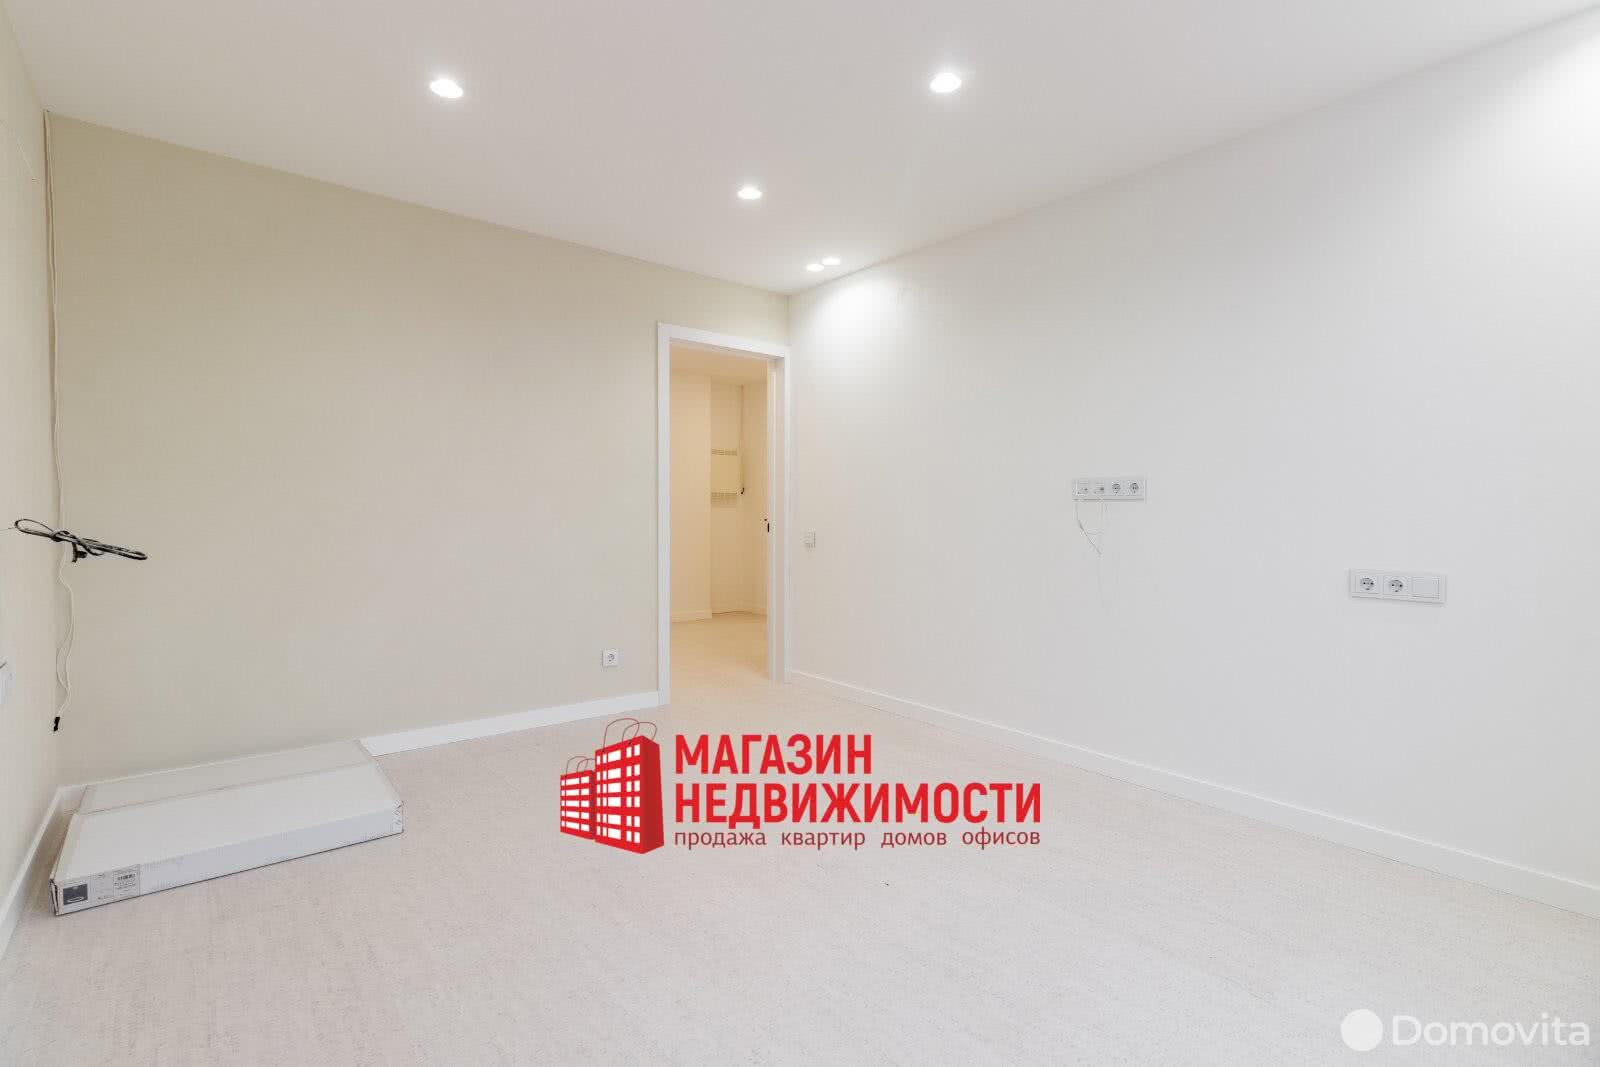 квартира, Гродно, пр-т Клецкова, д. 21А, стоимость продажи 325 450 р.